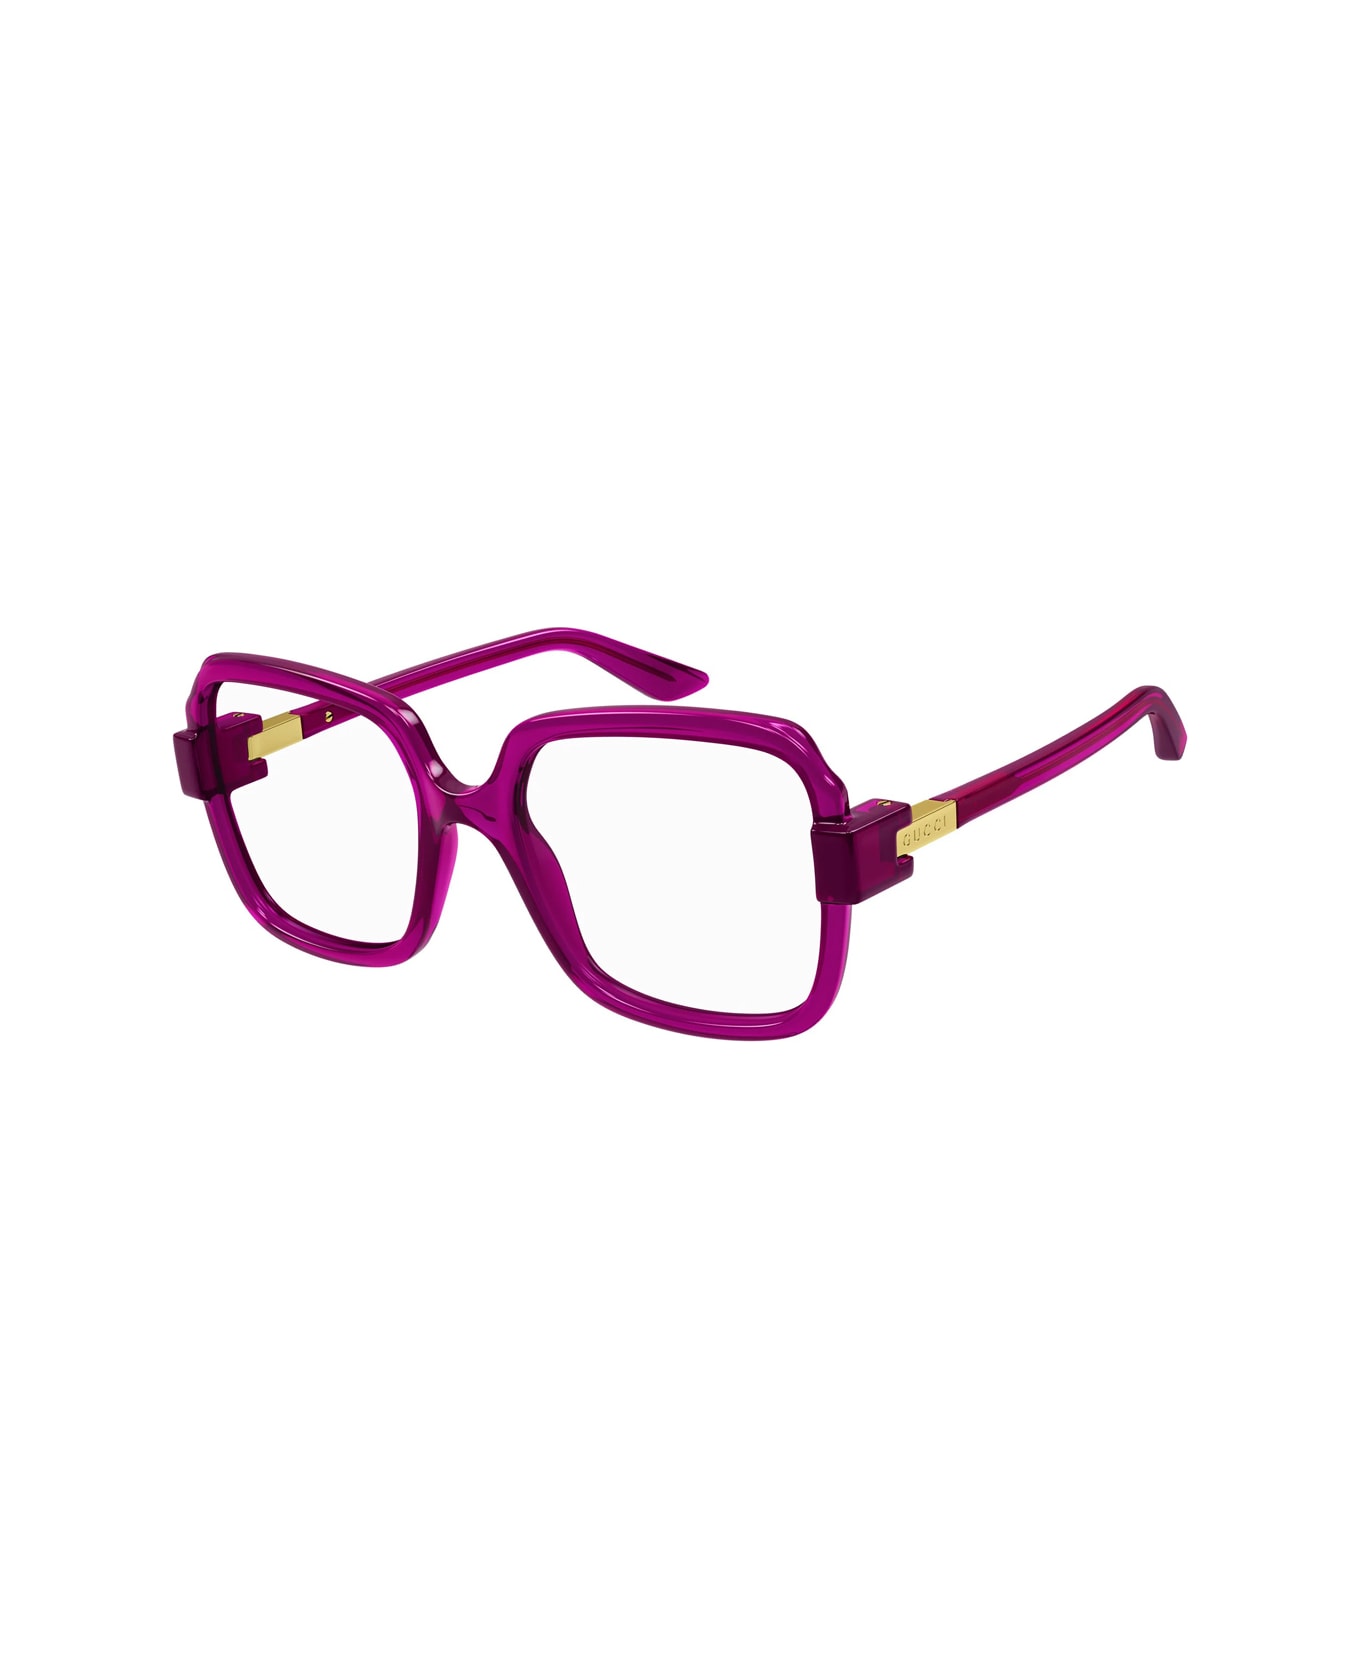 Gucci Eyewear Gg1433o Linea Lettering 003 Glasses - Viola